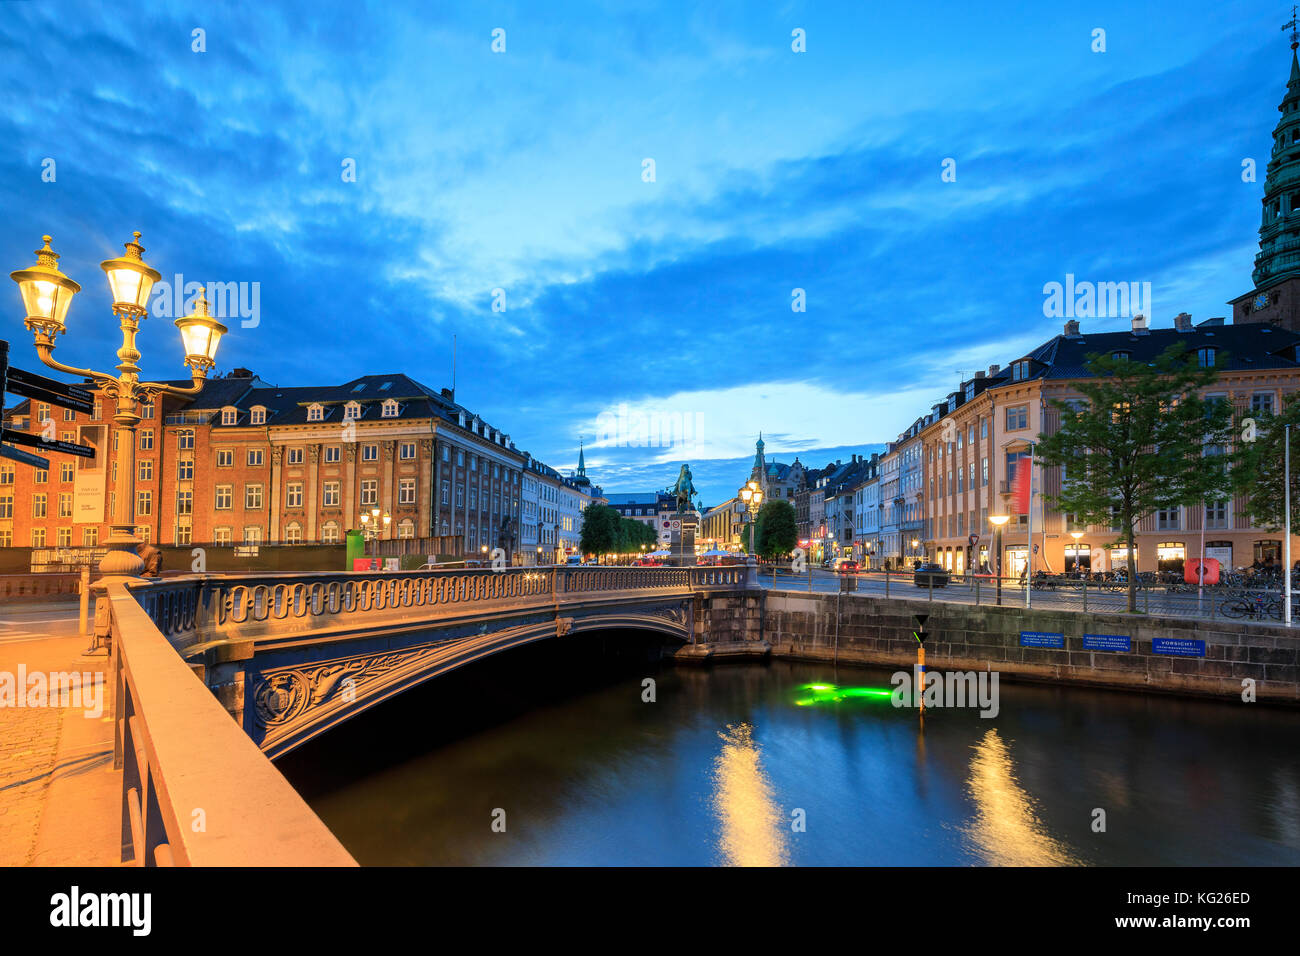 Hojbro Bridge and Plads between the adjoining Amagertorv and Slotsholmen Canal at night, Copenhagen, Denmark, Europe Stock Photo